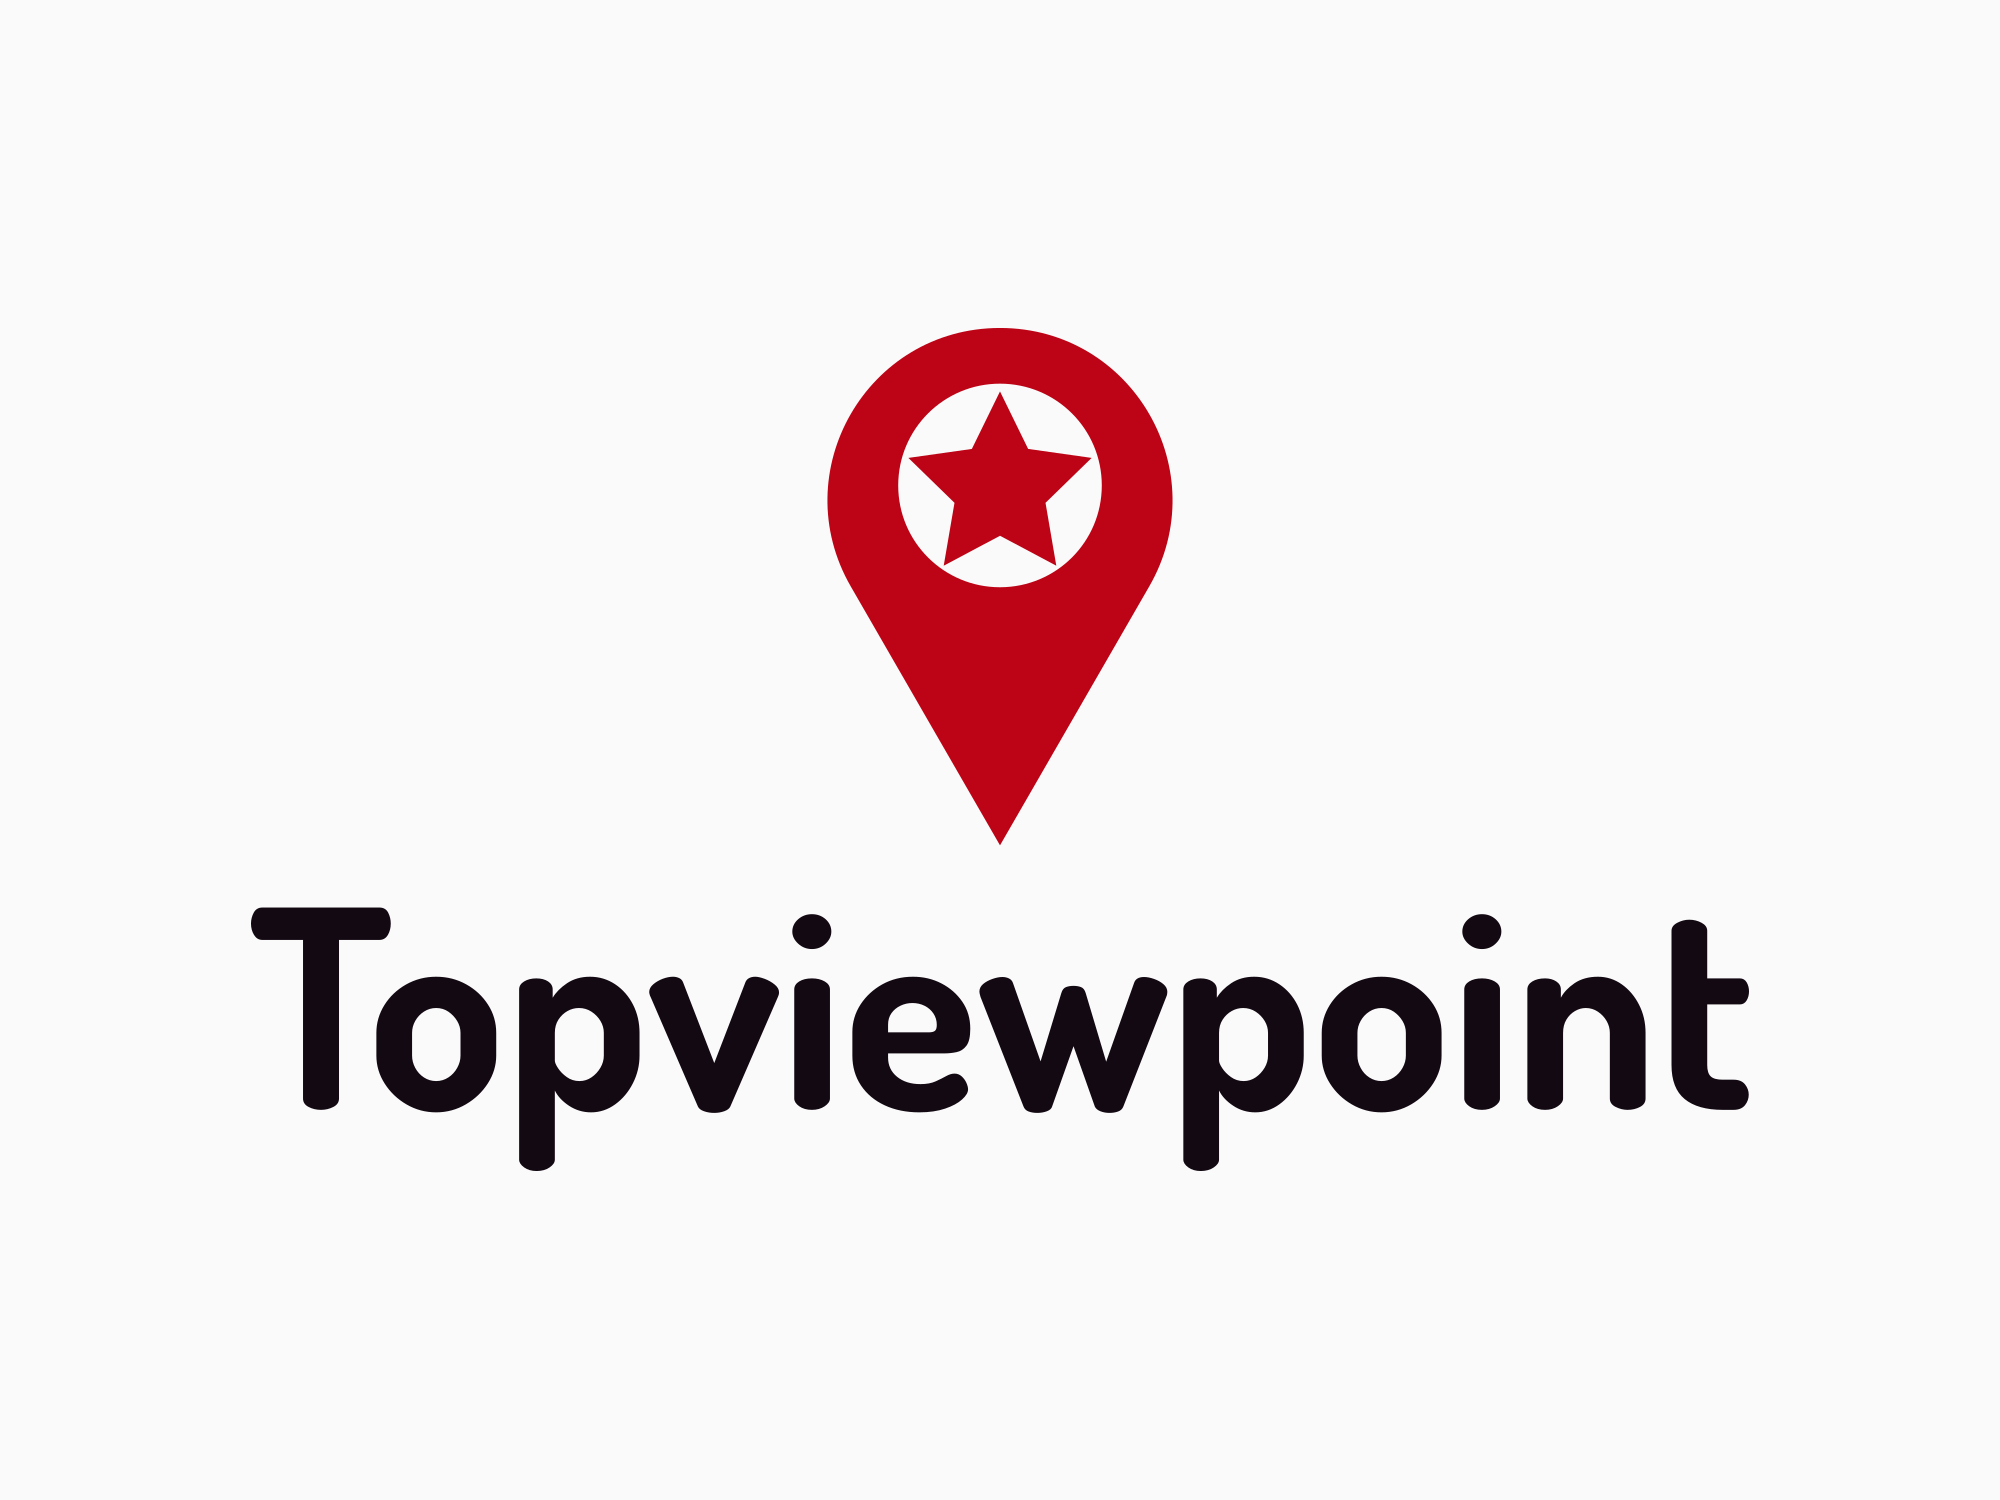 (c) Topviewpoint.com